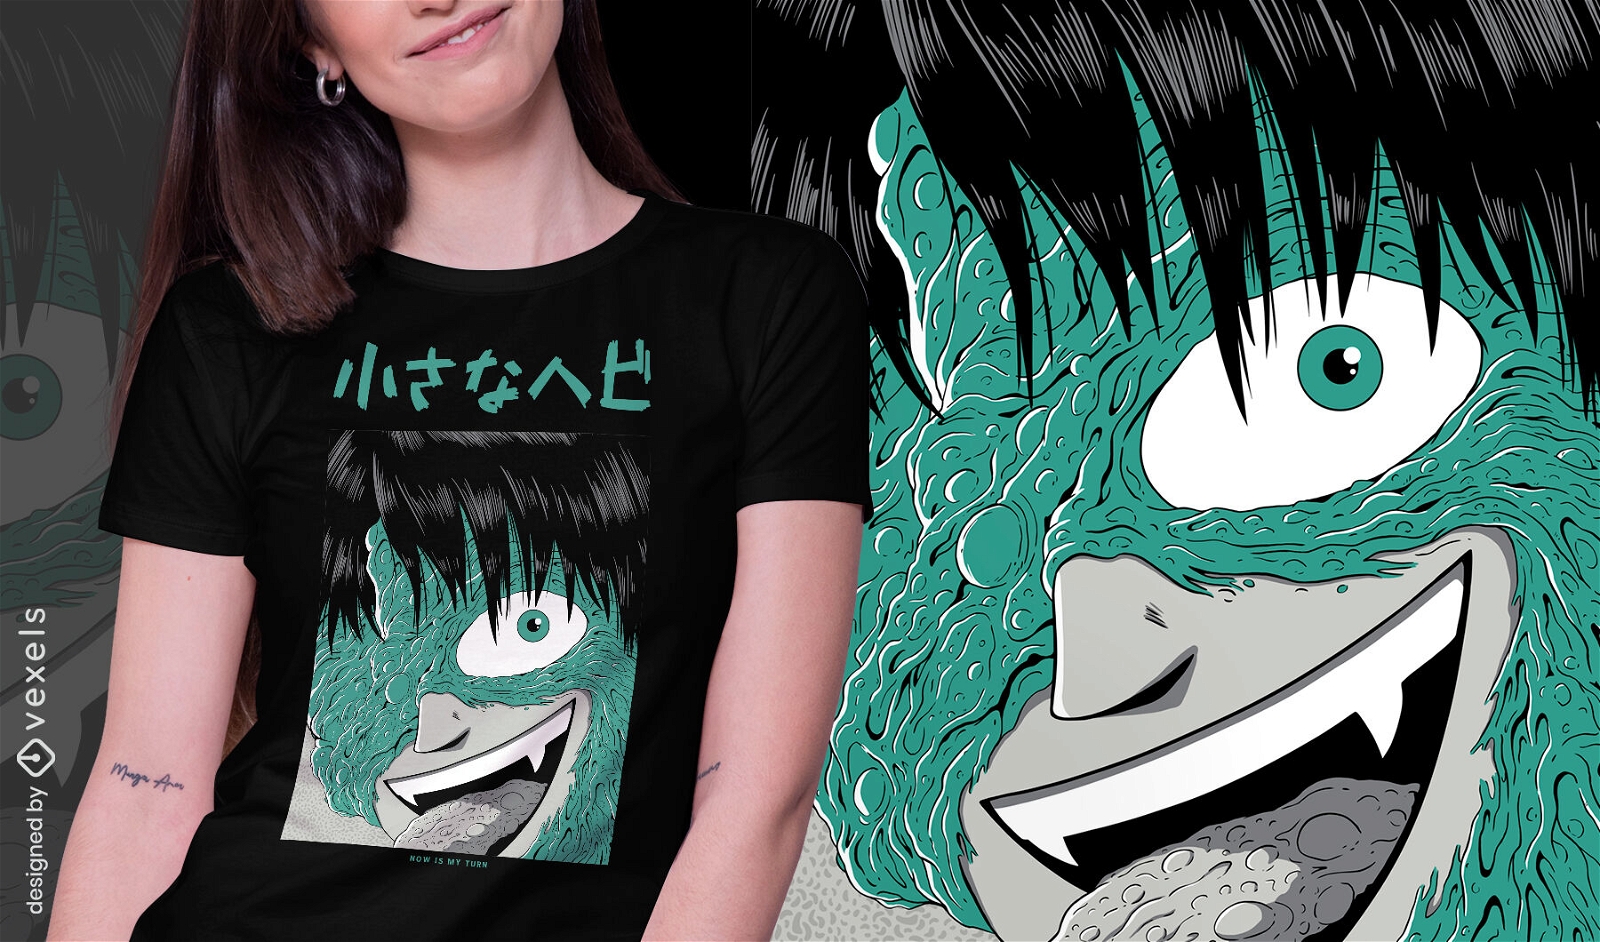 L?chelndes japanisches Monster-T-Shirt-Design